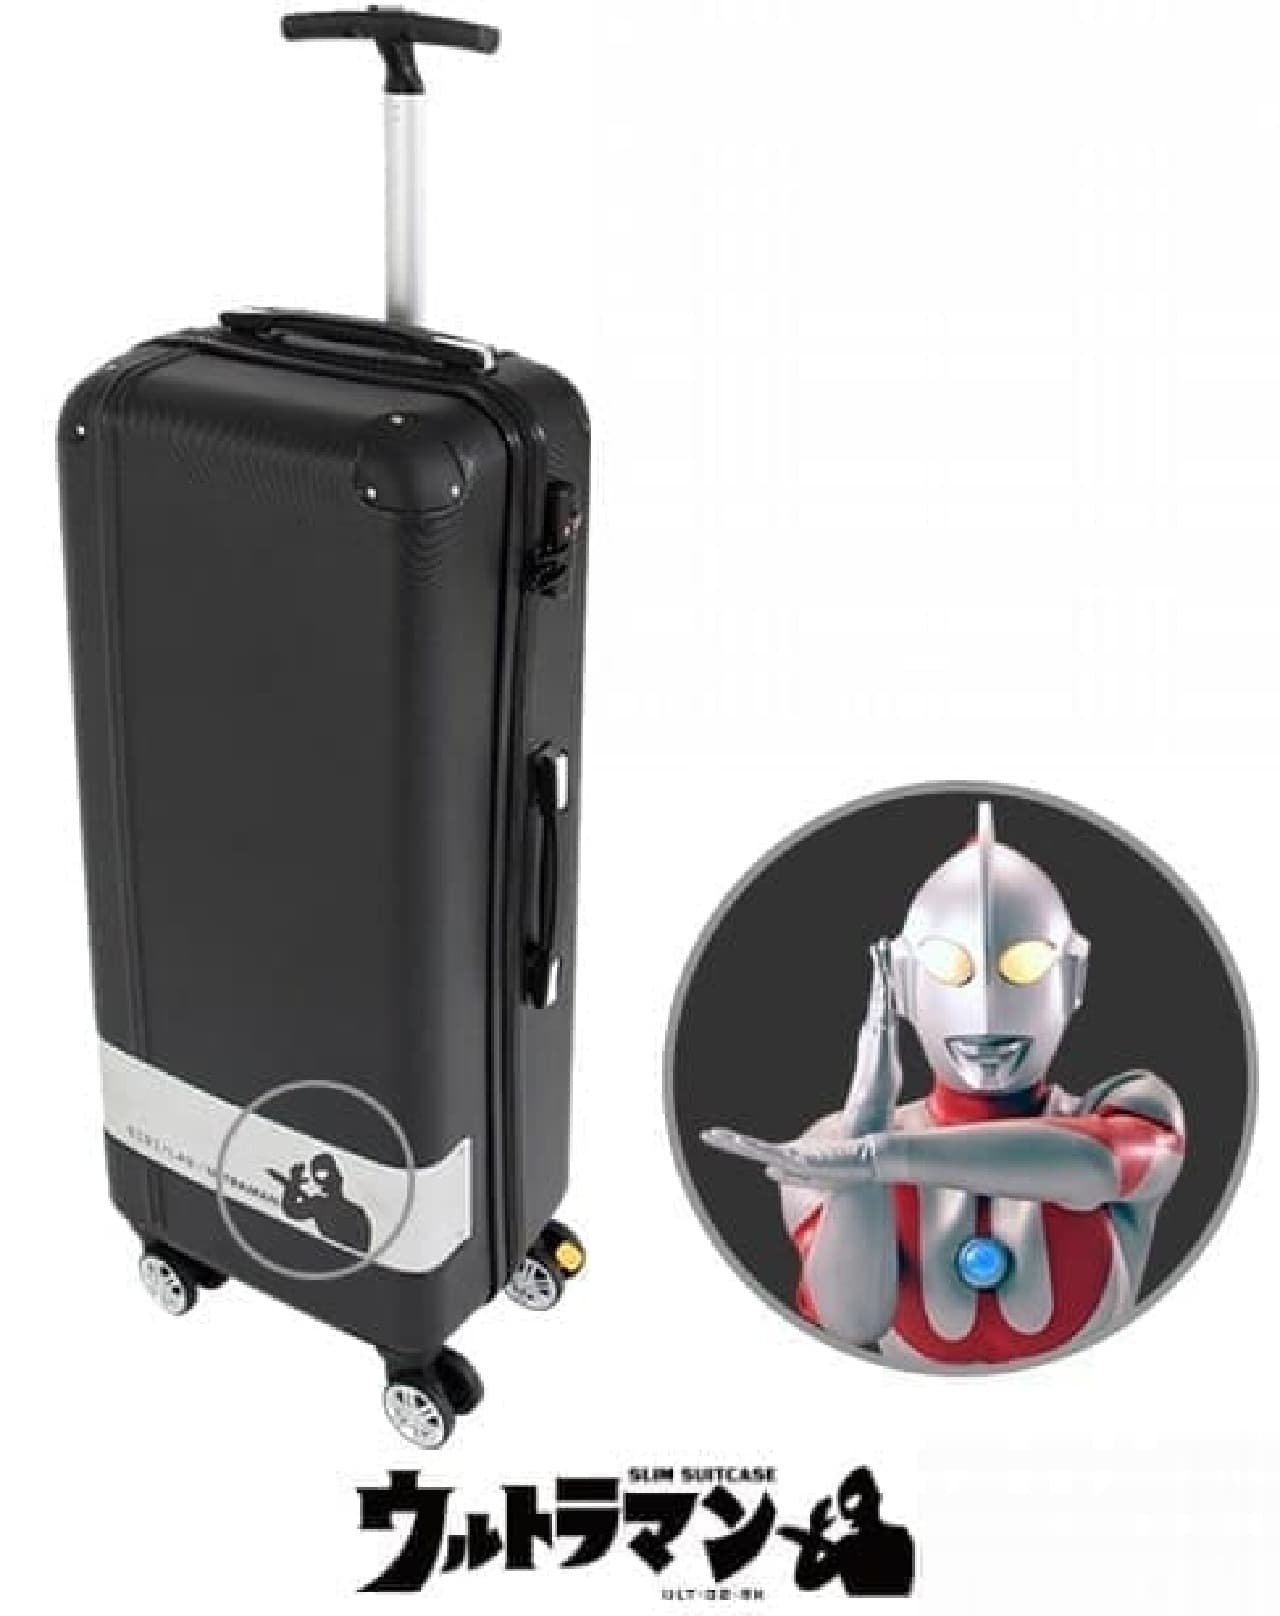 Ultraman motif "slim suitcase ULTRAMAN"